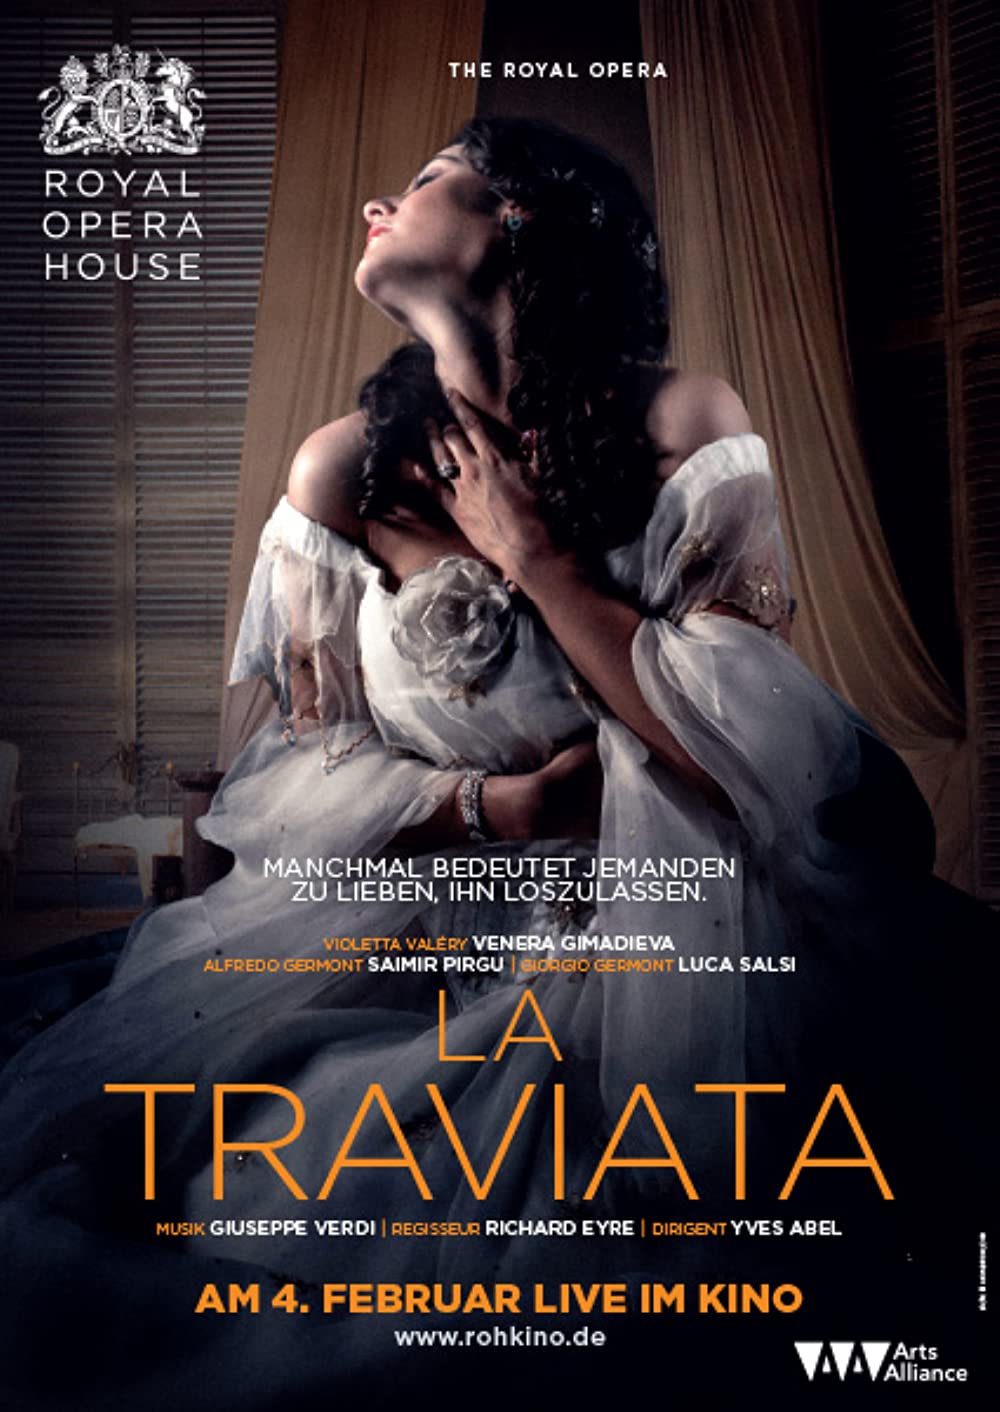 Royal Opera House London: La Traviata